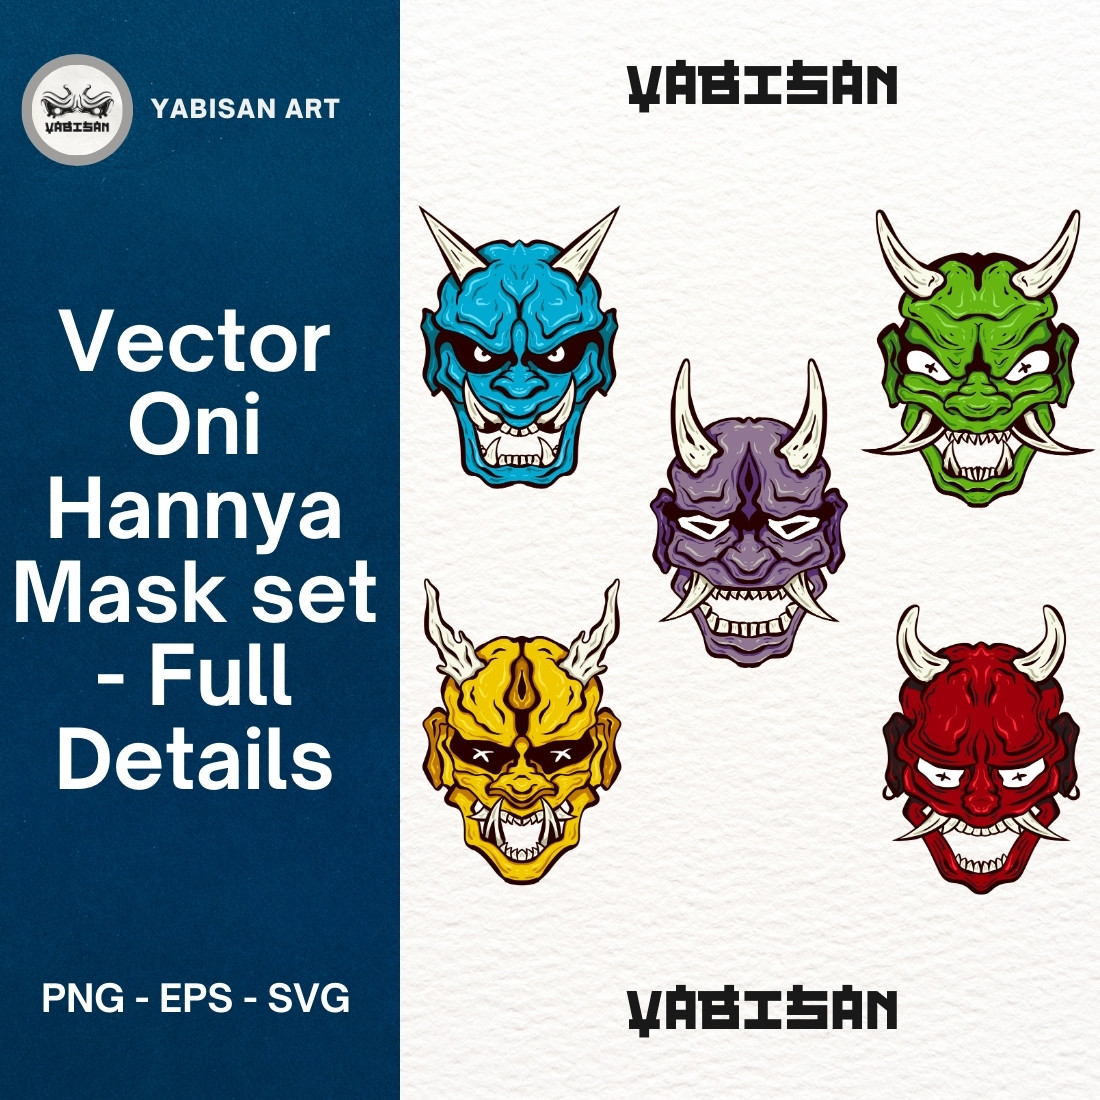 Oni Hannya Mask art set - Full Details cover image.